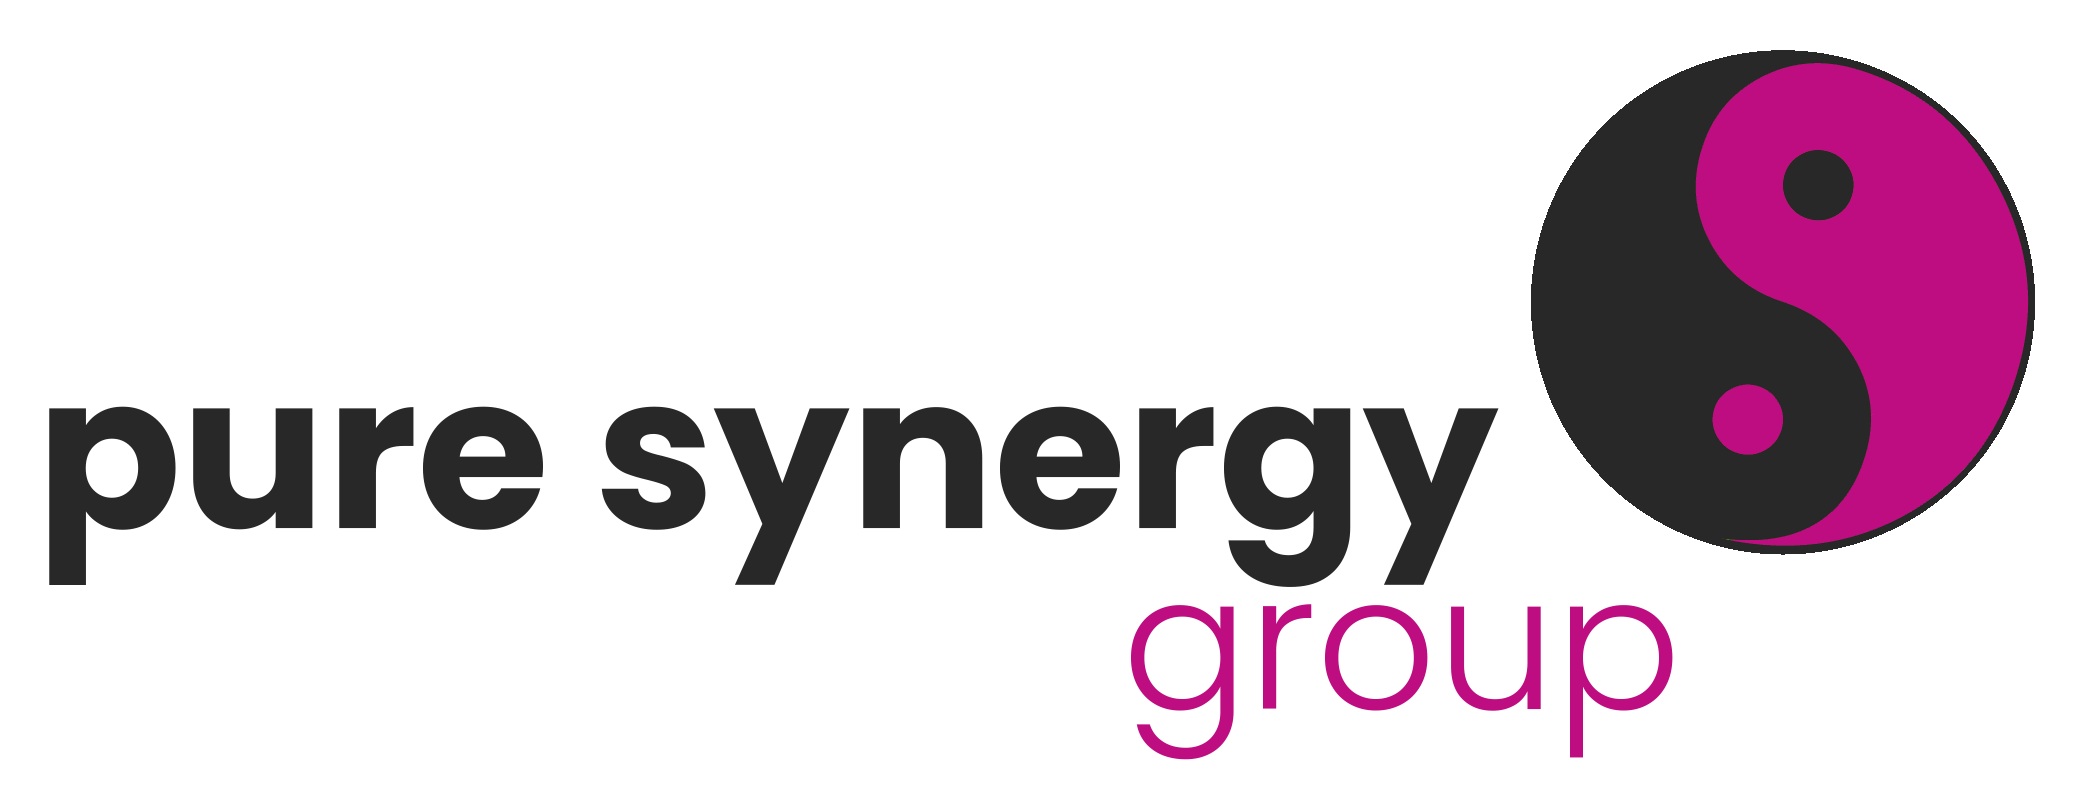 PureSynergy logo